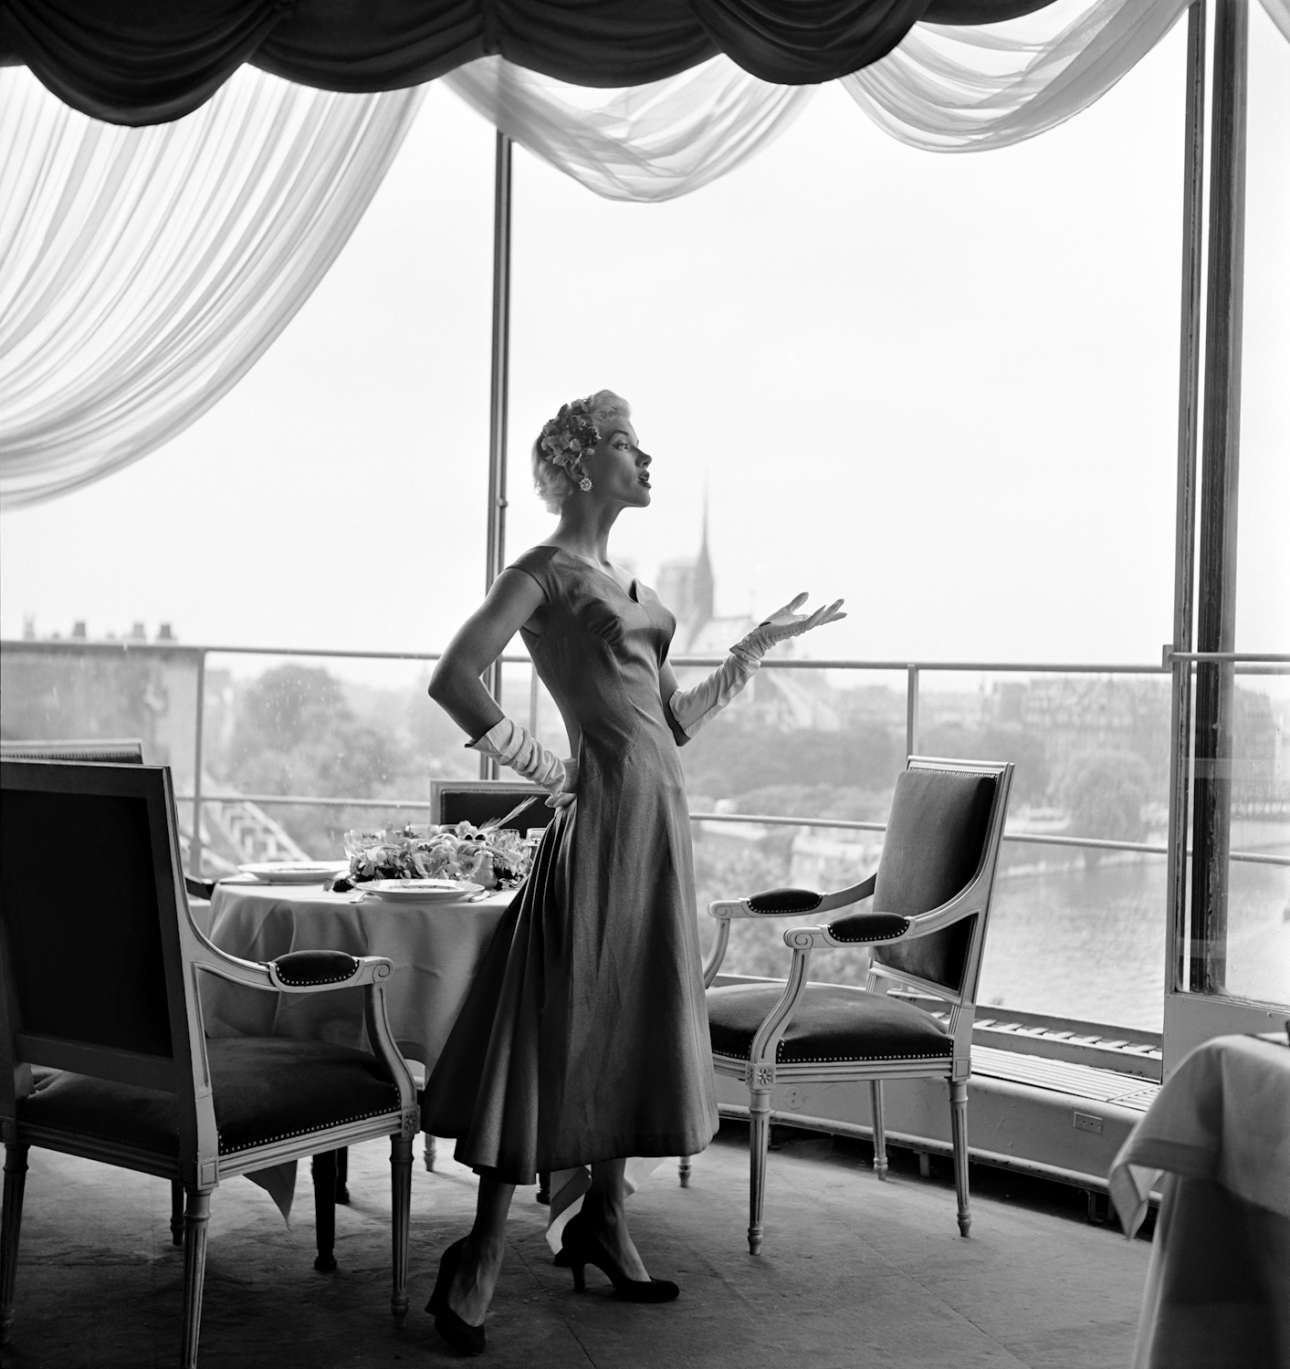 Givenchy υψηλής ραπτικής στο εστιατόριο Tour d'Argent με θέα στο Σηκουάνα και την Παναγία των Παρισίων